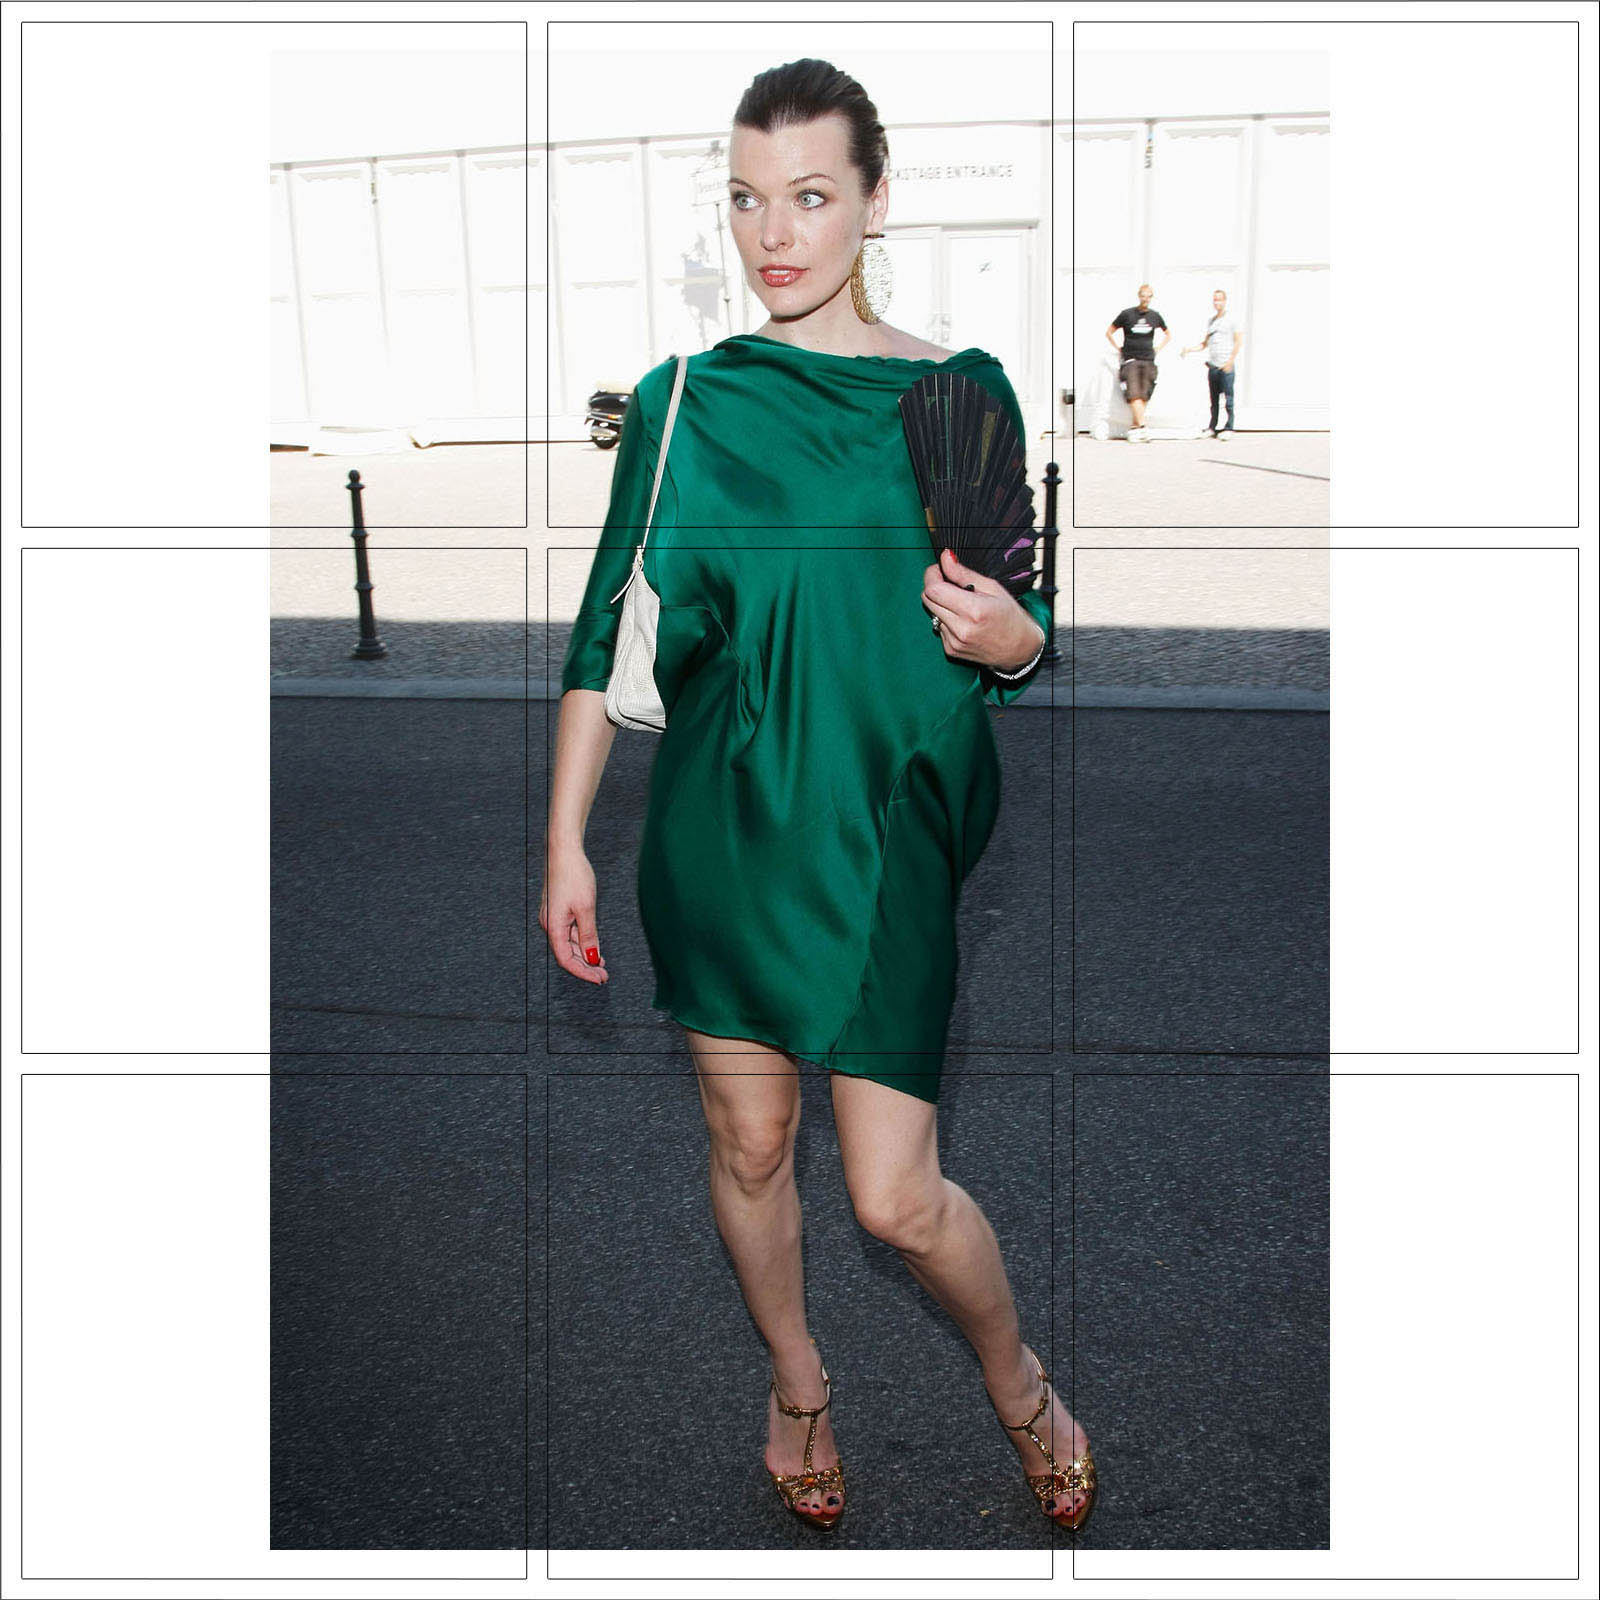 Milla Jovovich - Hot Sexy Photo Print - Buy 1, Get 2 FREE - Choice Of ...